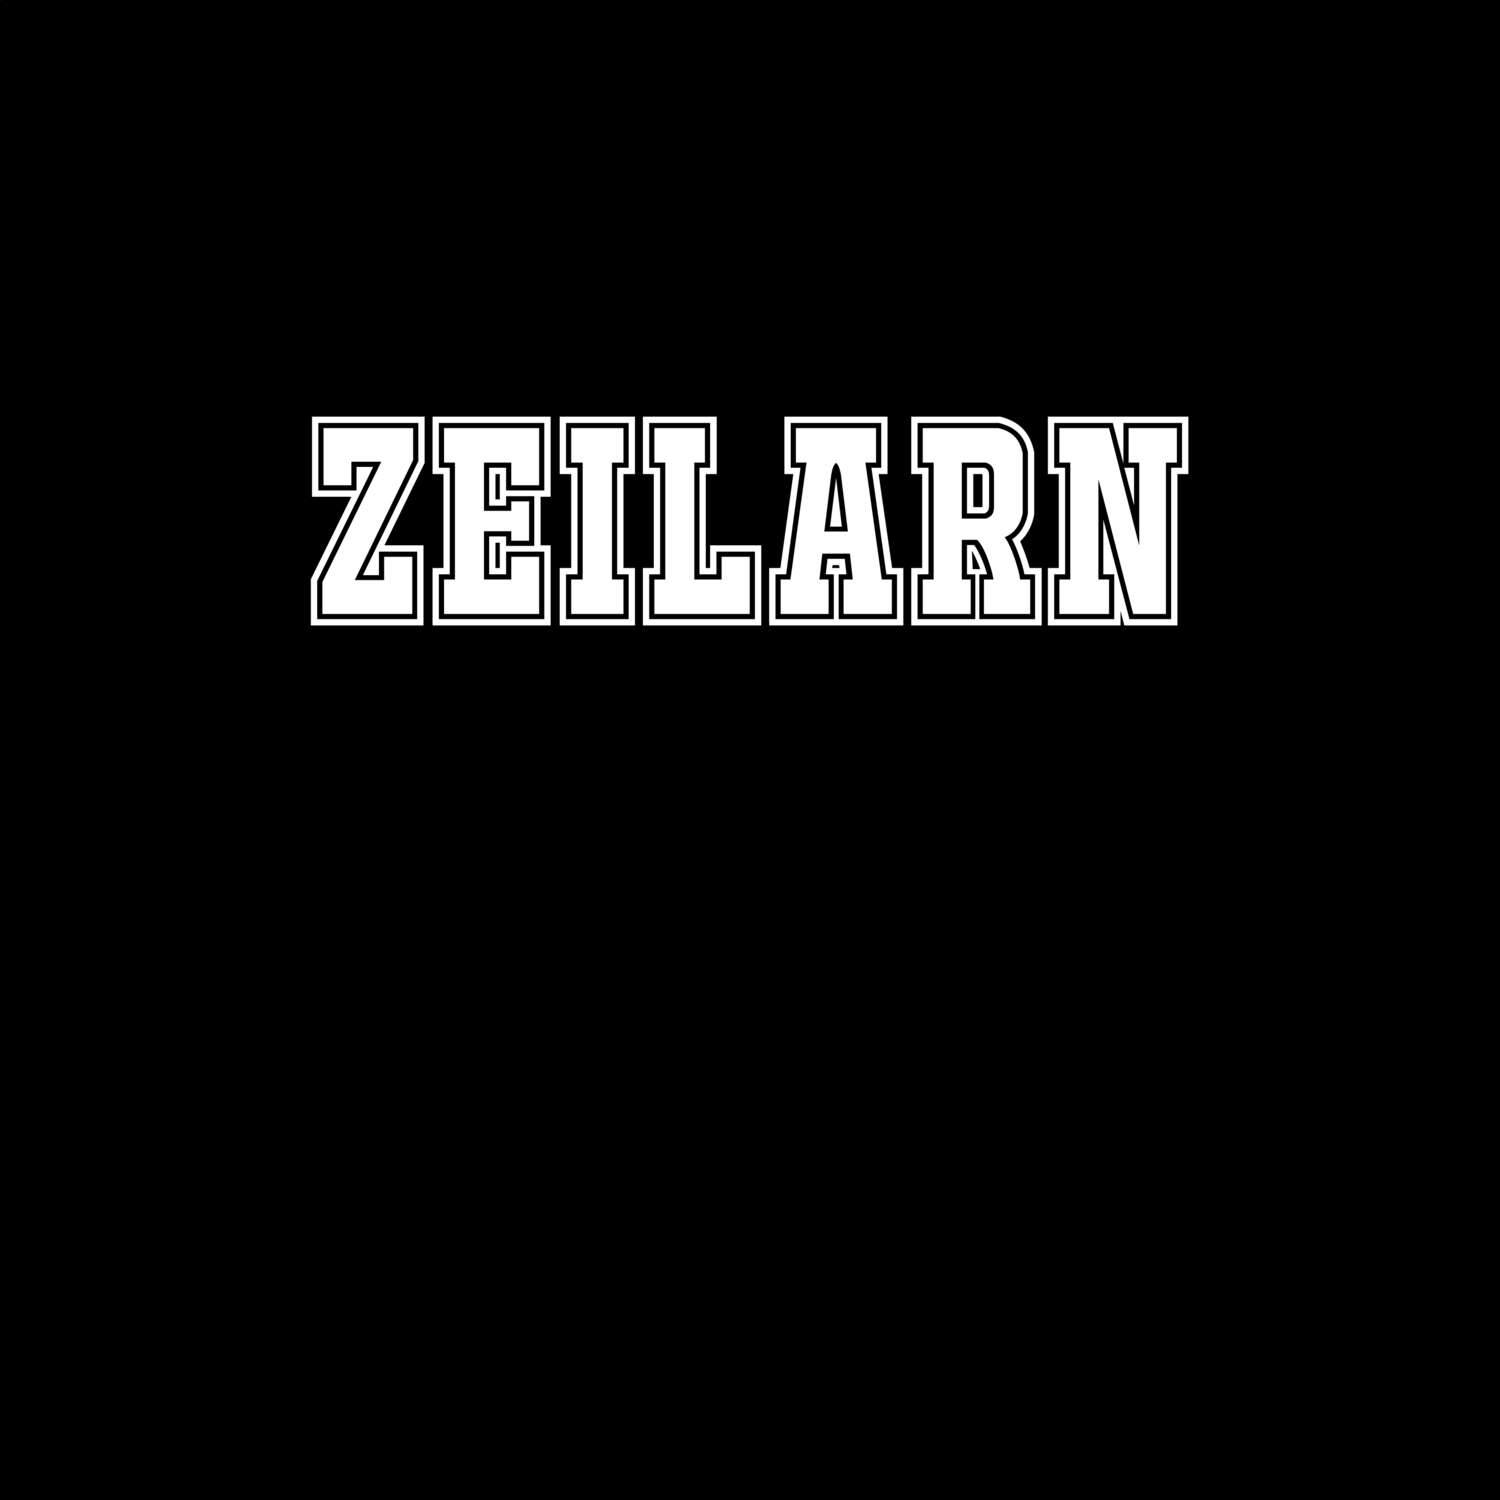 Zeilarn T-Shirt »Classic«